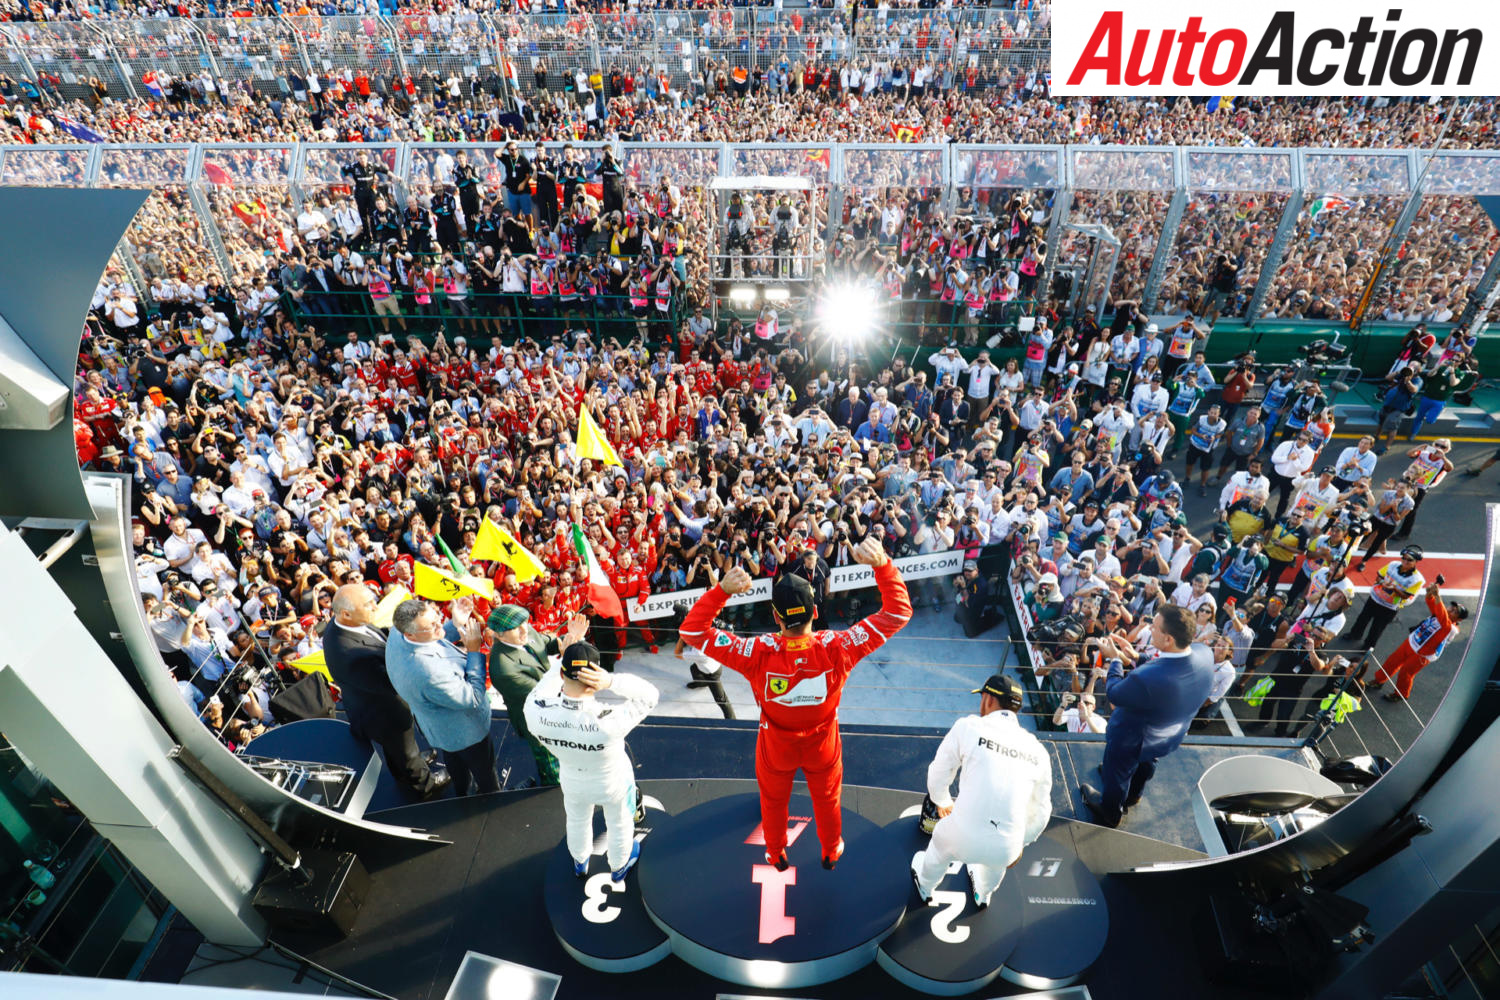 Biggest attendance on the cards for Australian Grand Prix - Image: Motorsport Images